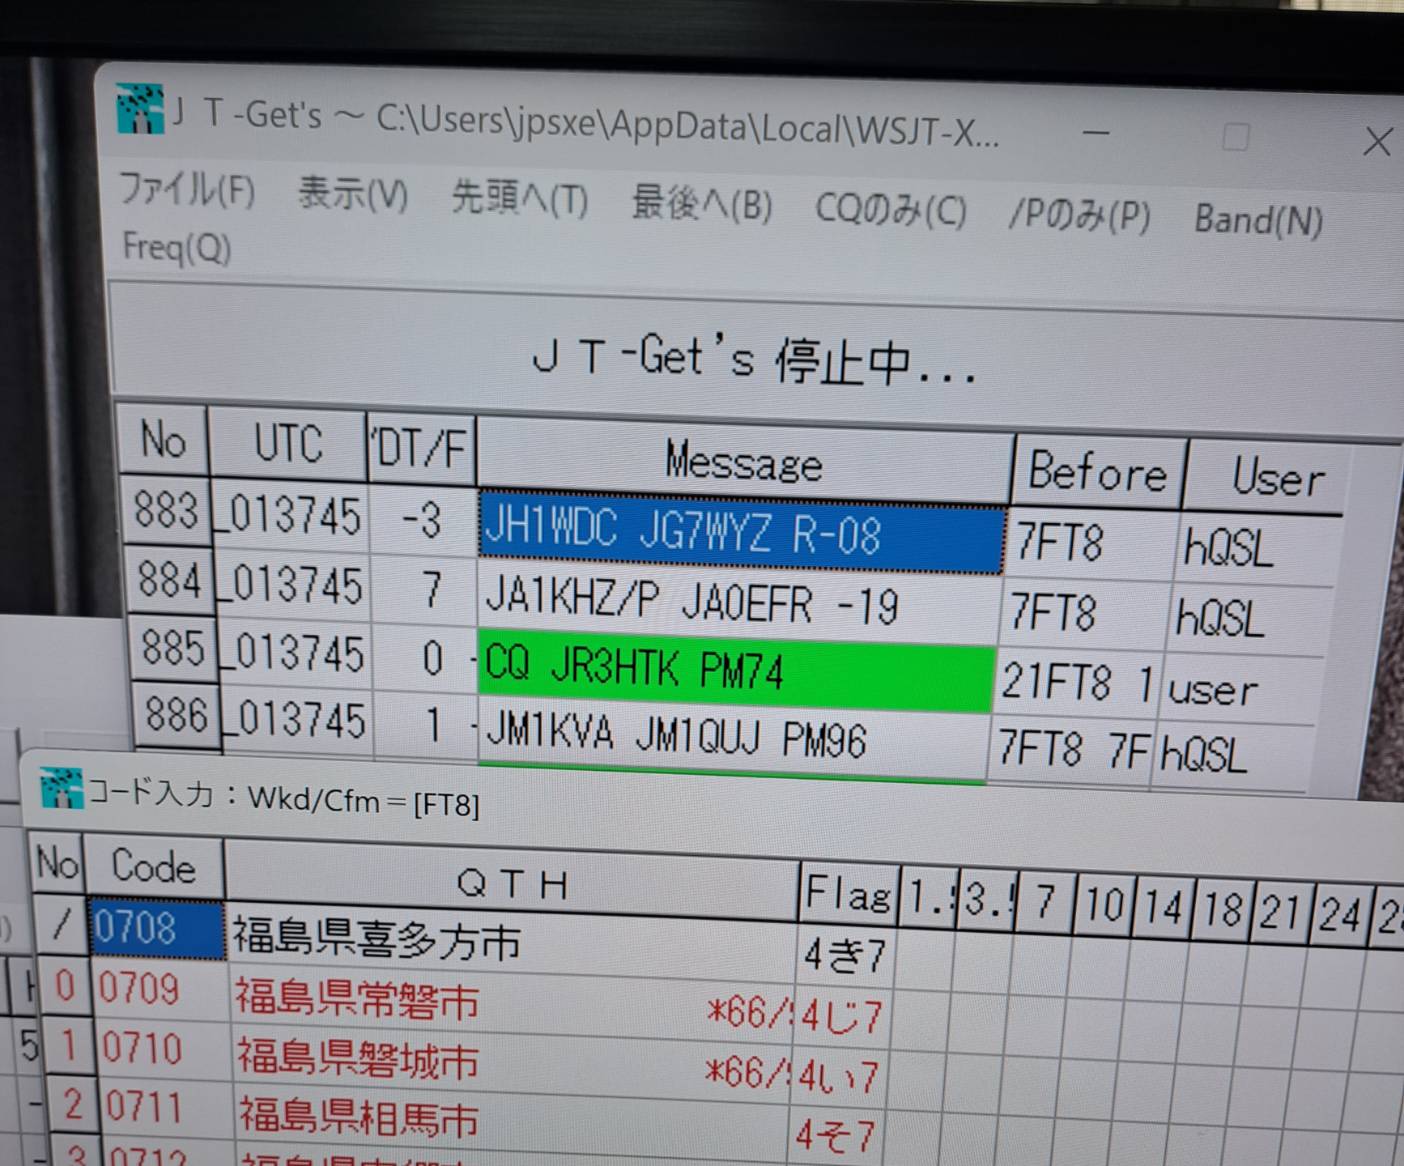 JT-Get's ~ (摜TCY: 1404~1166 178kB)